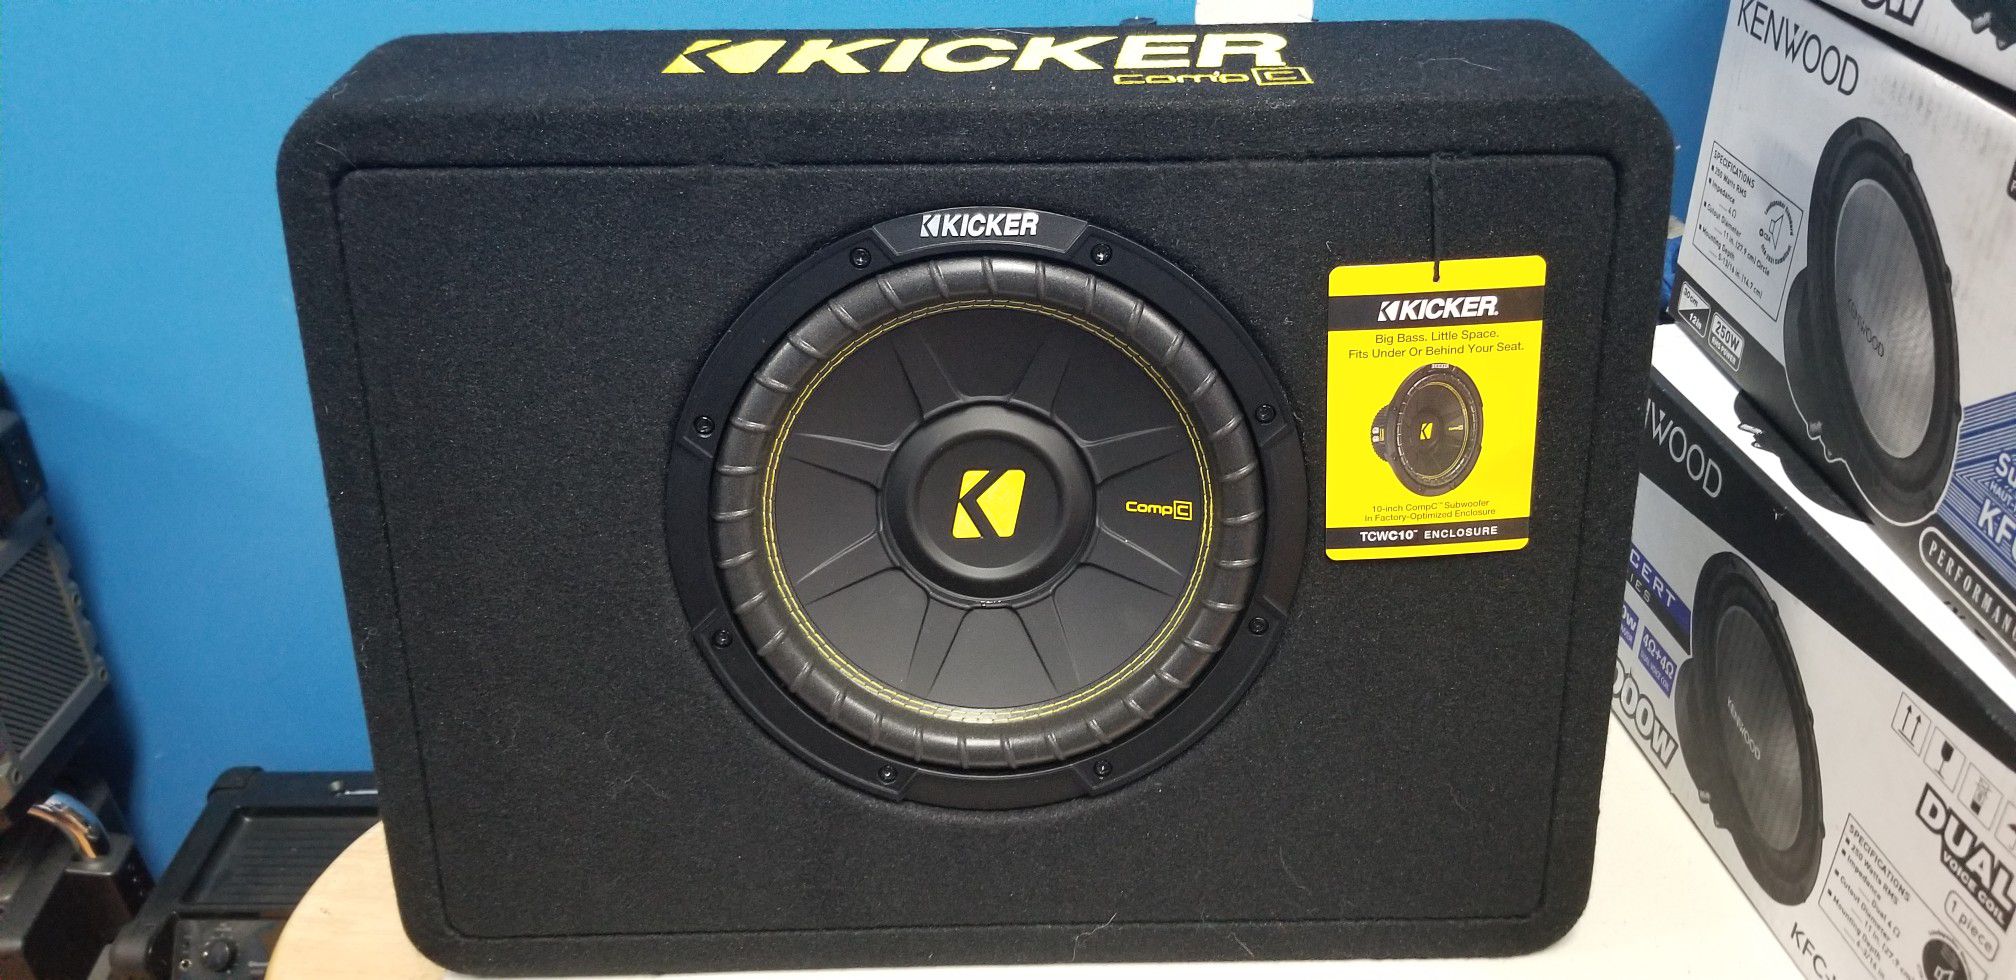 Kicker CompC 10" subwoofer in truck enclosure 600 watts.